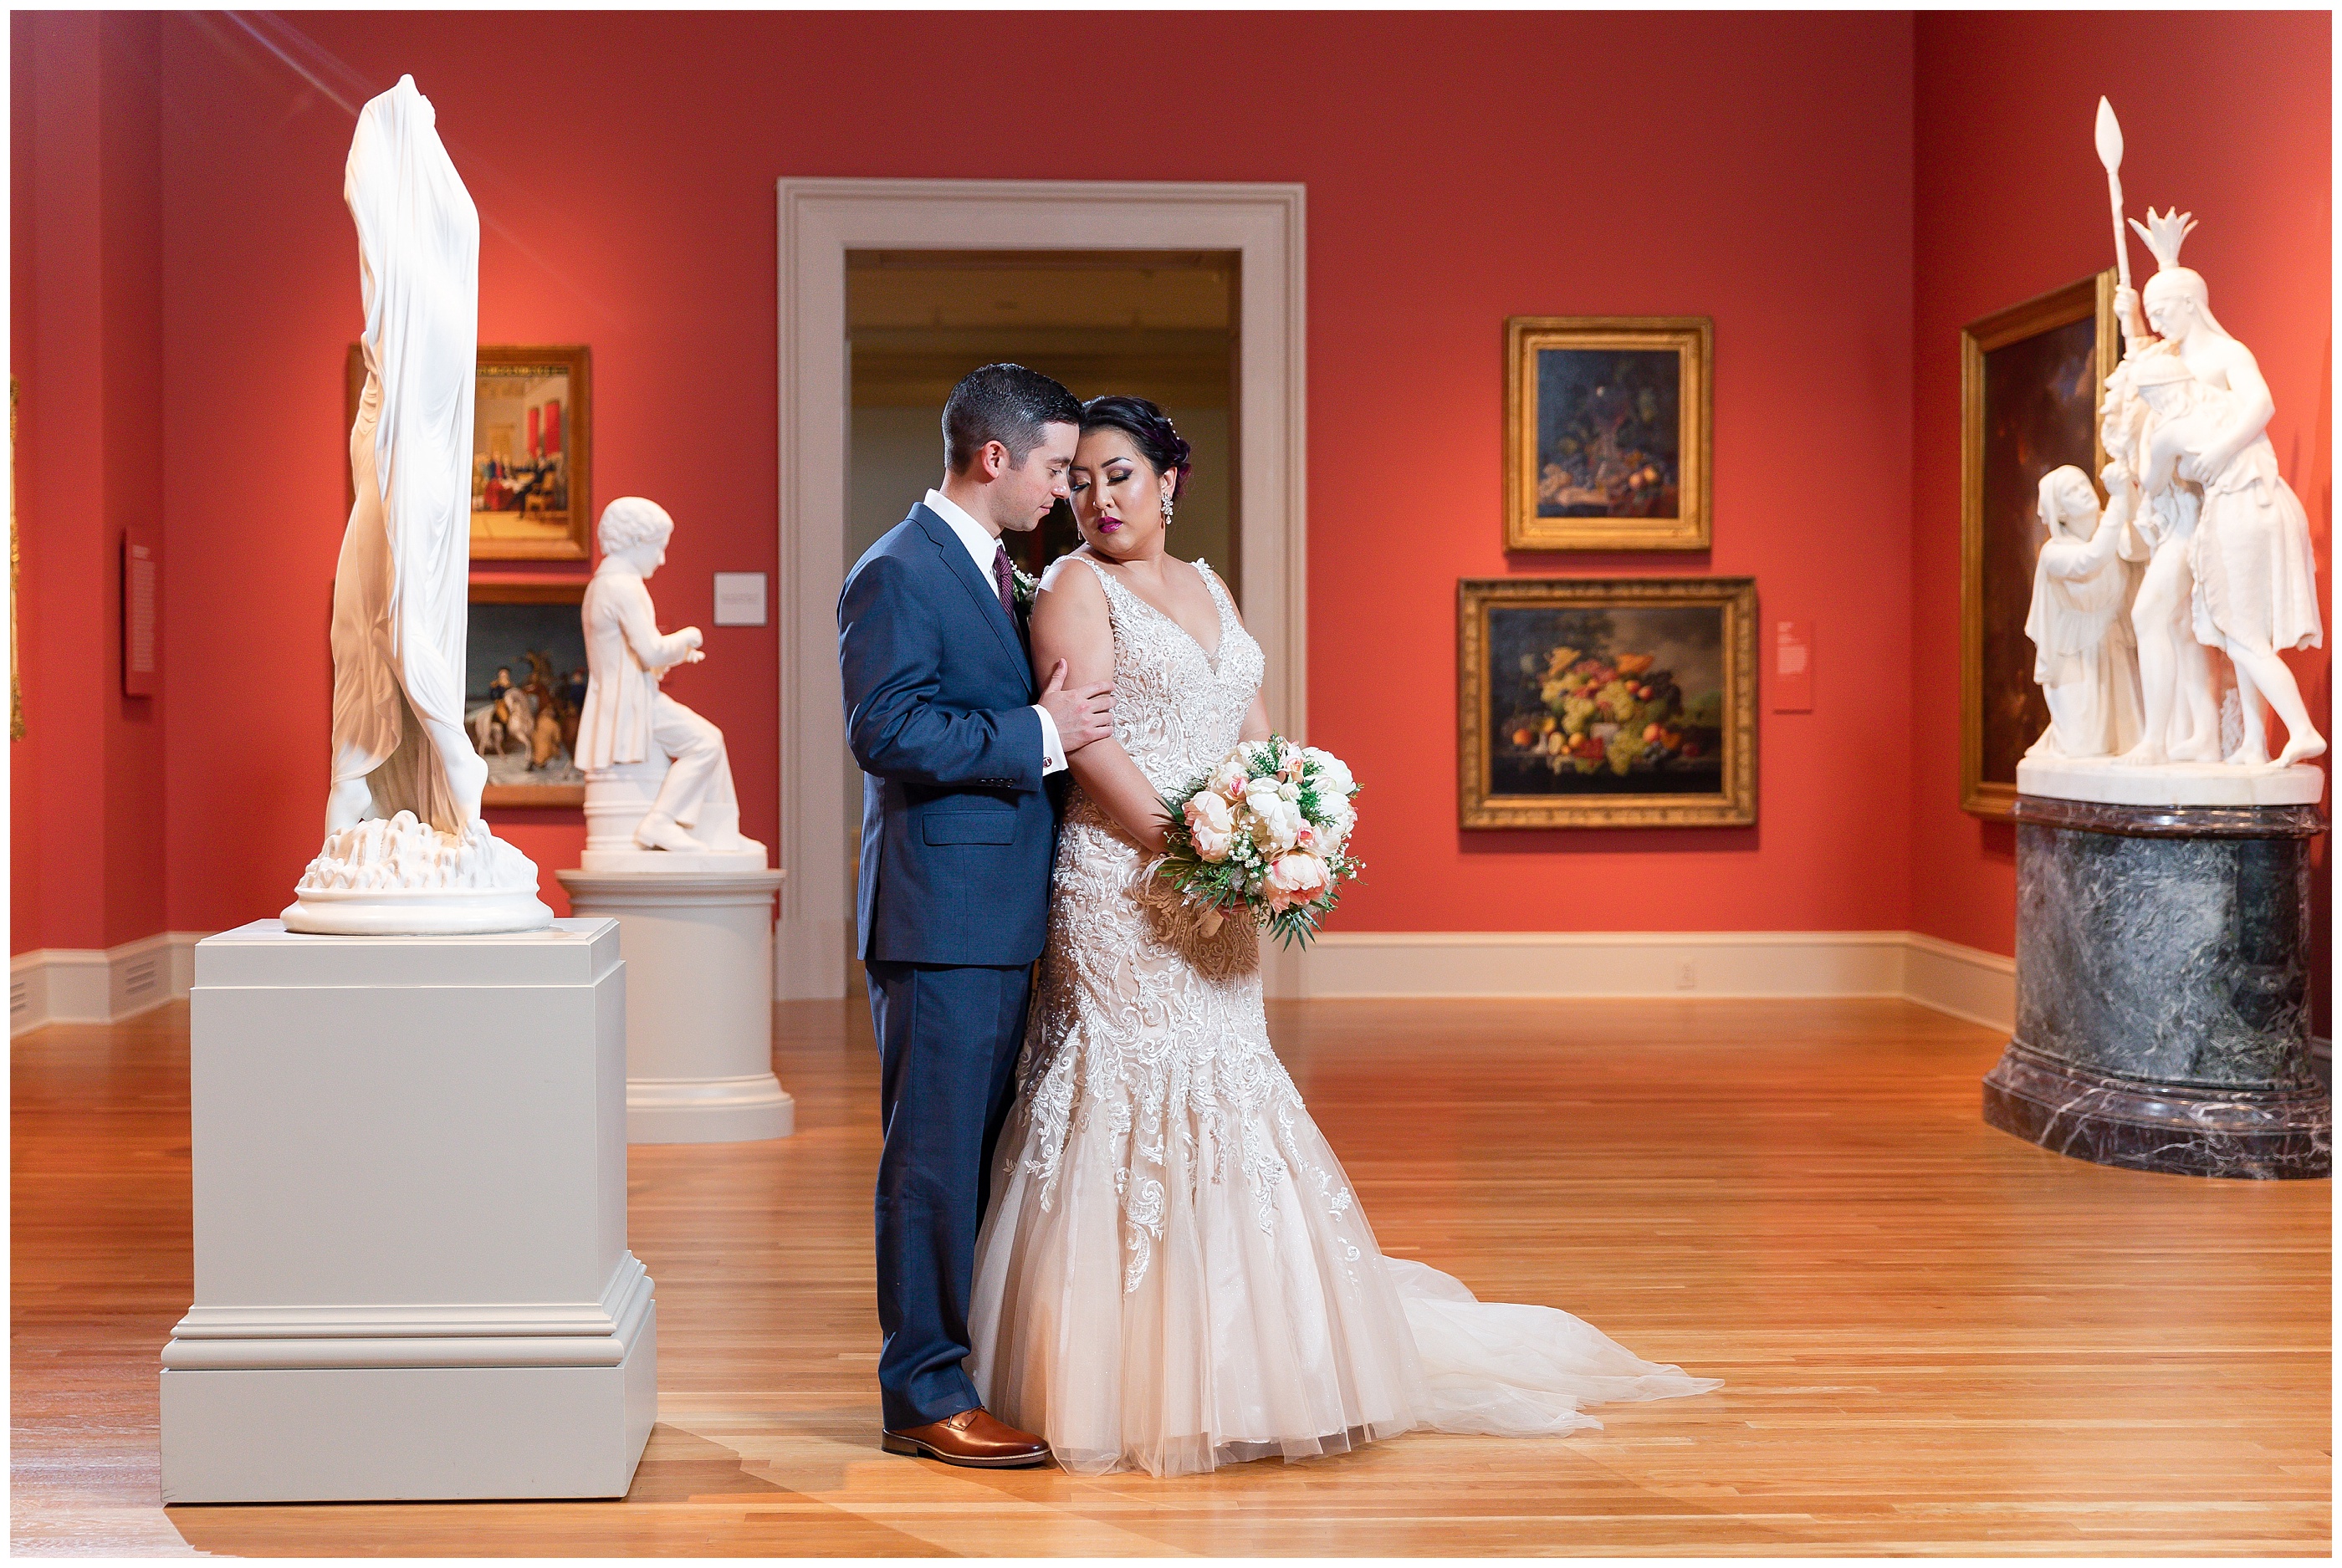 Chrysler Museum of Art Norfolk Va Wedding Virginia wedding photographer Luke and Ashley Photography